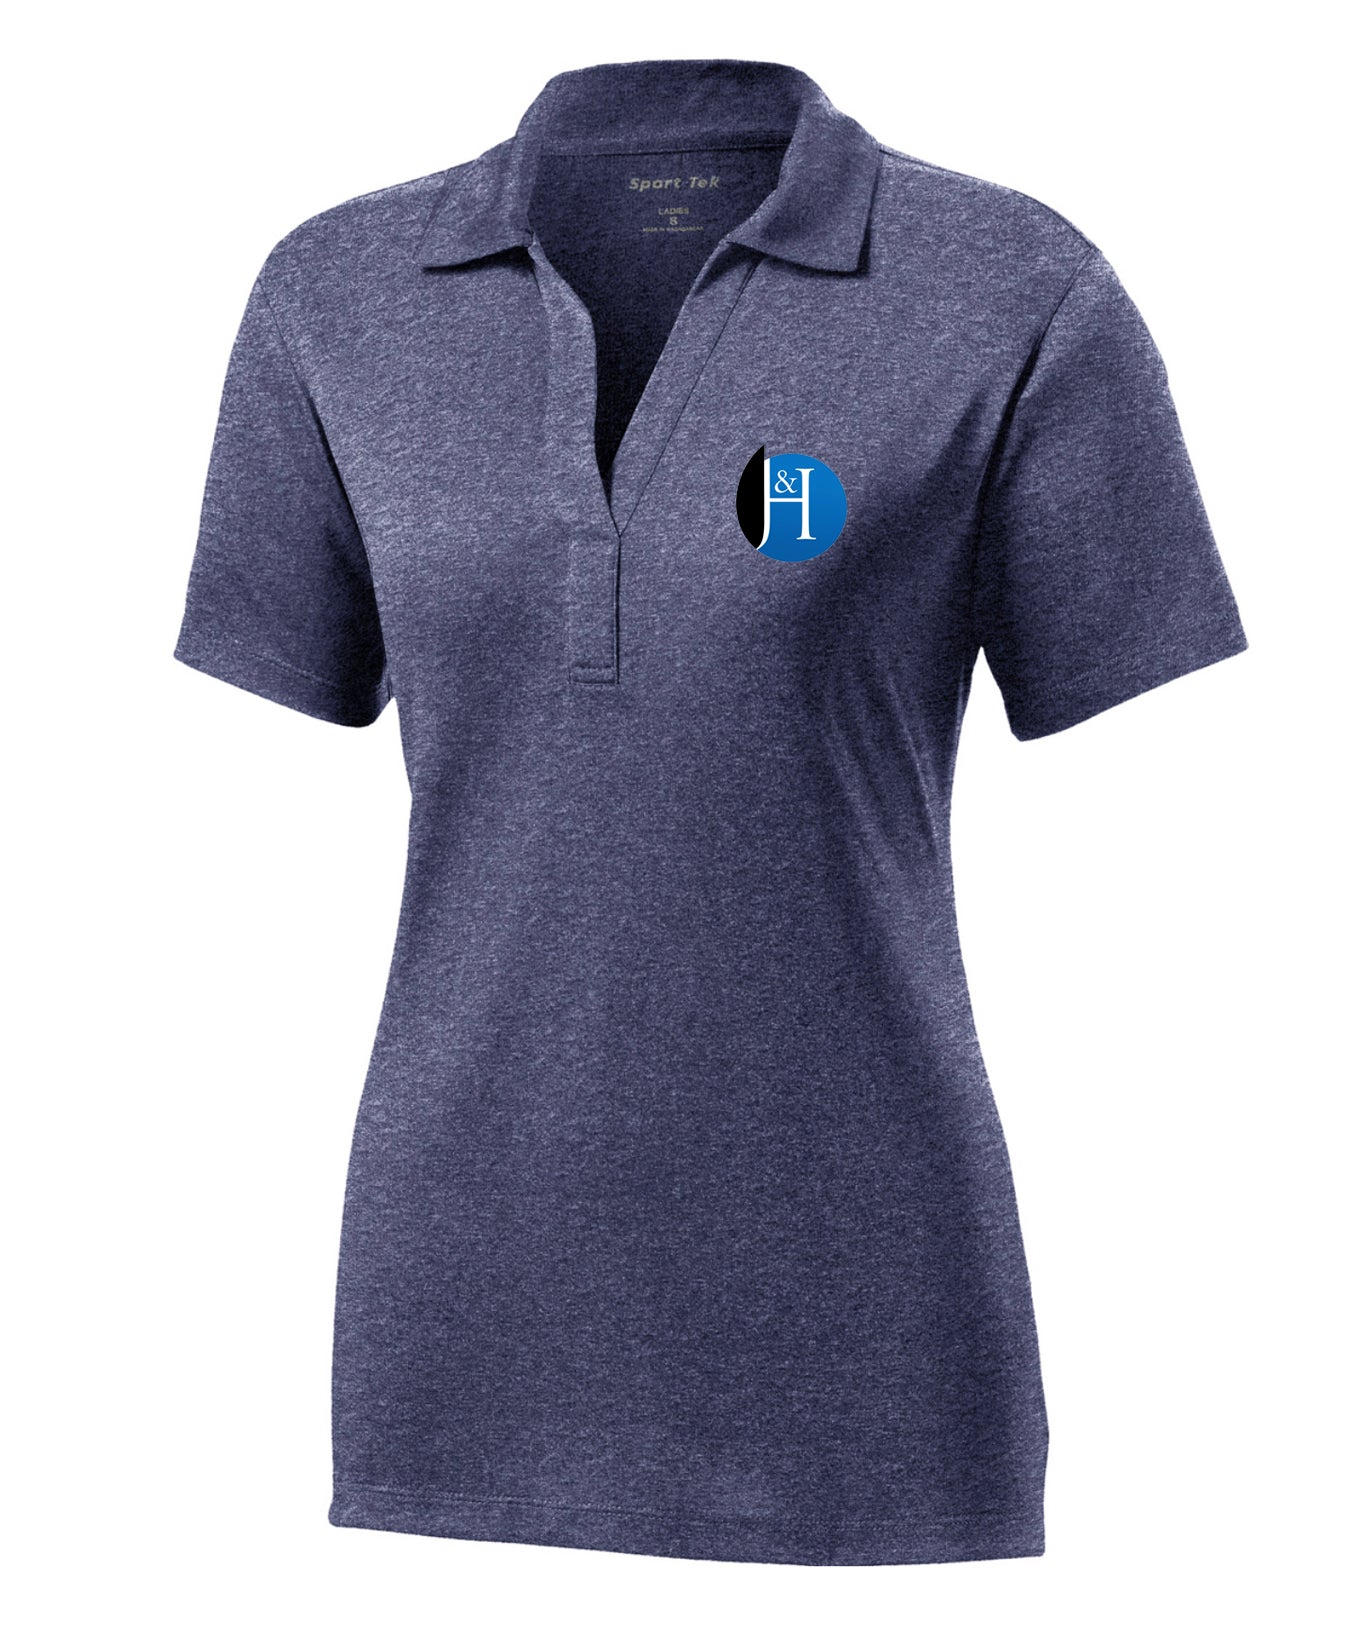 J&H - *New Logo - Womens Polo (True Navy Heather)